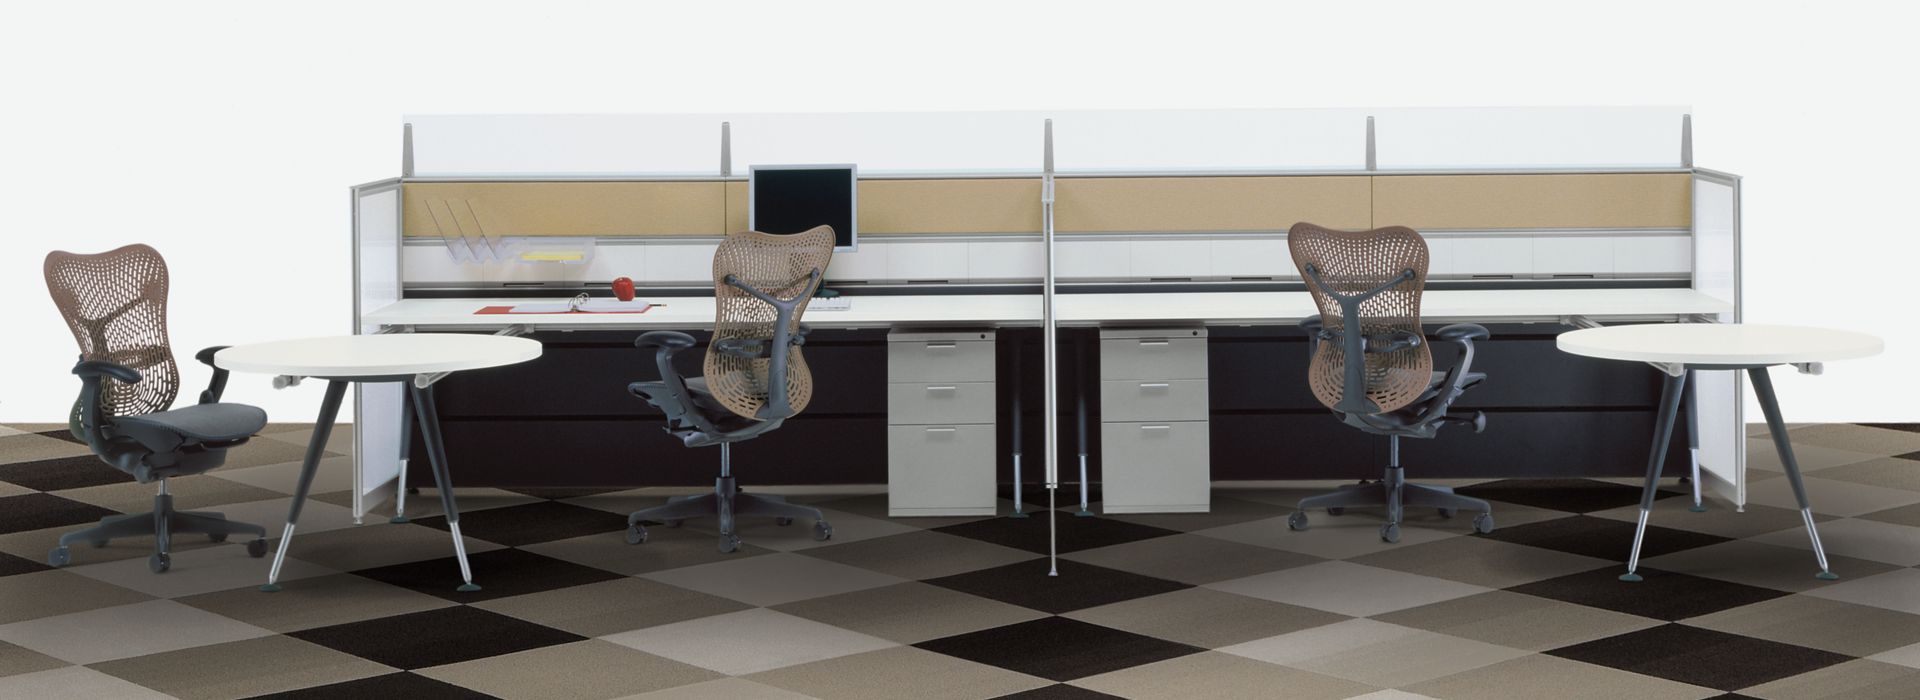 Interface Tectonics carpet tile in cubicle workspace 